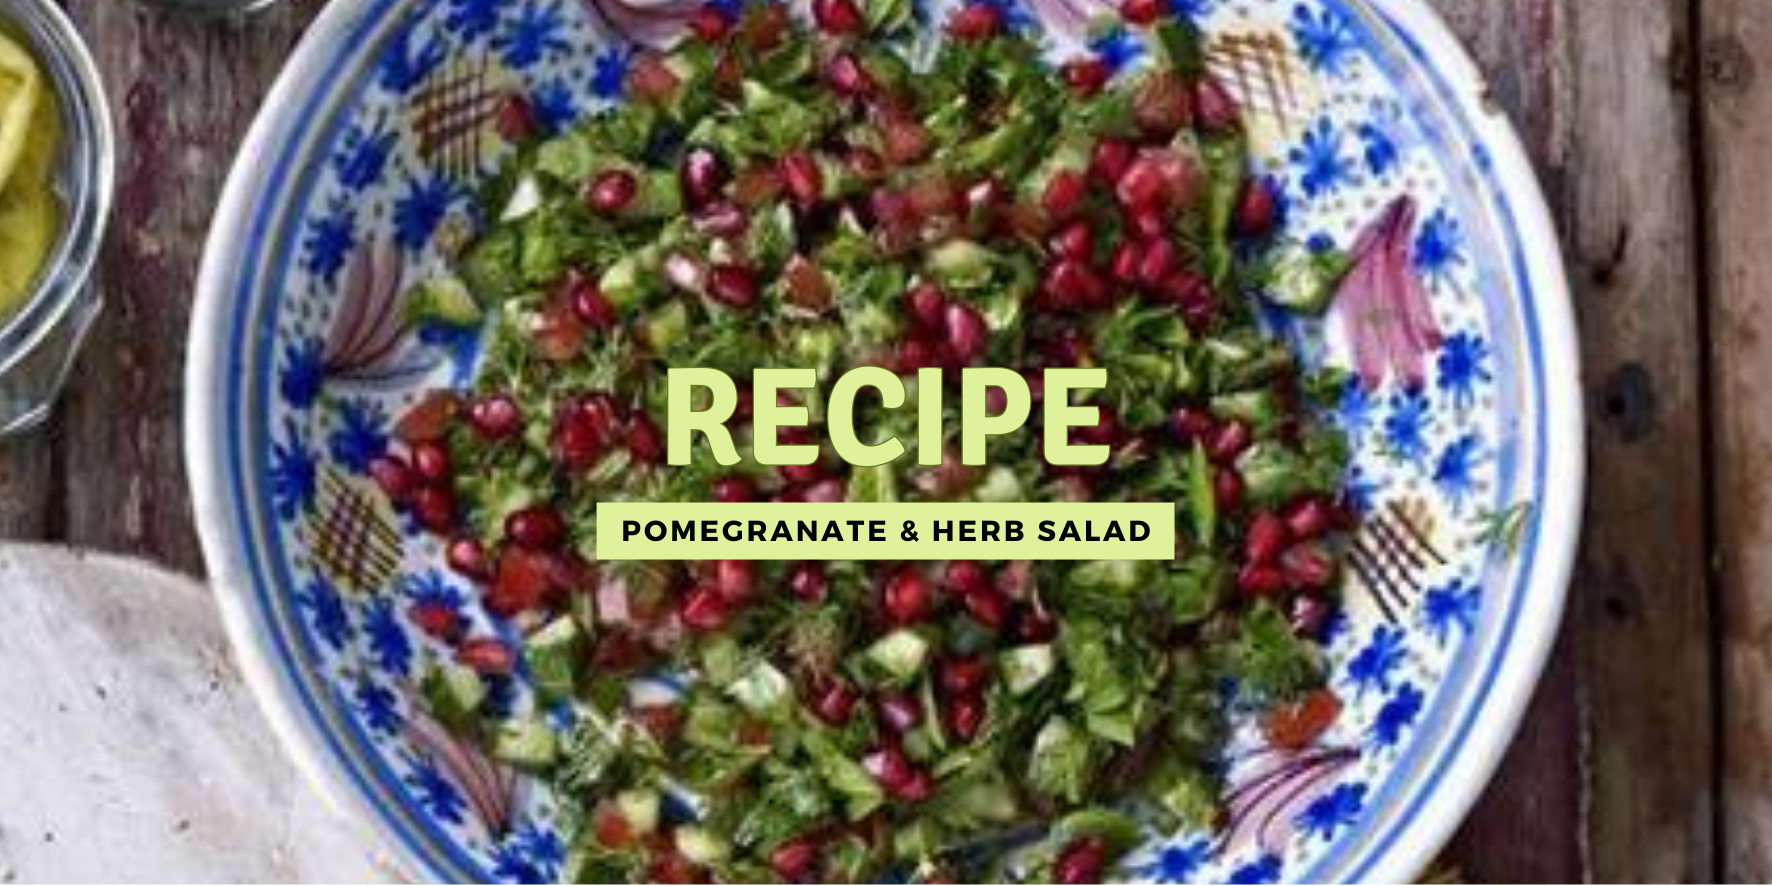 Pomegranate & Herb Salad Recipe